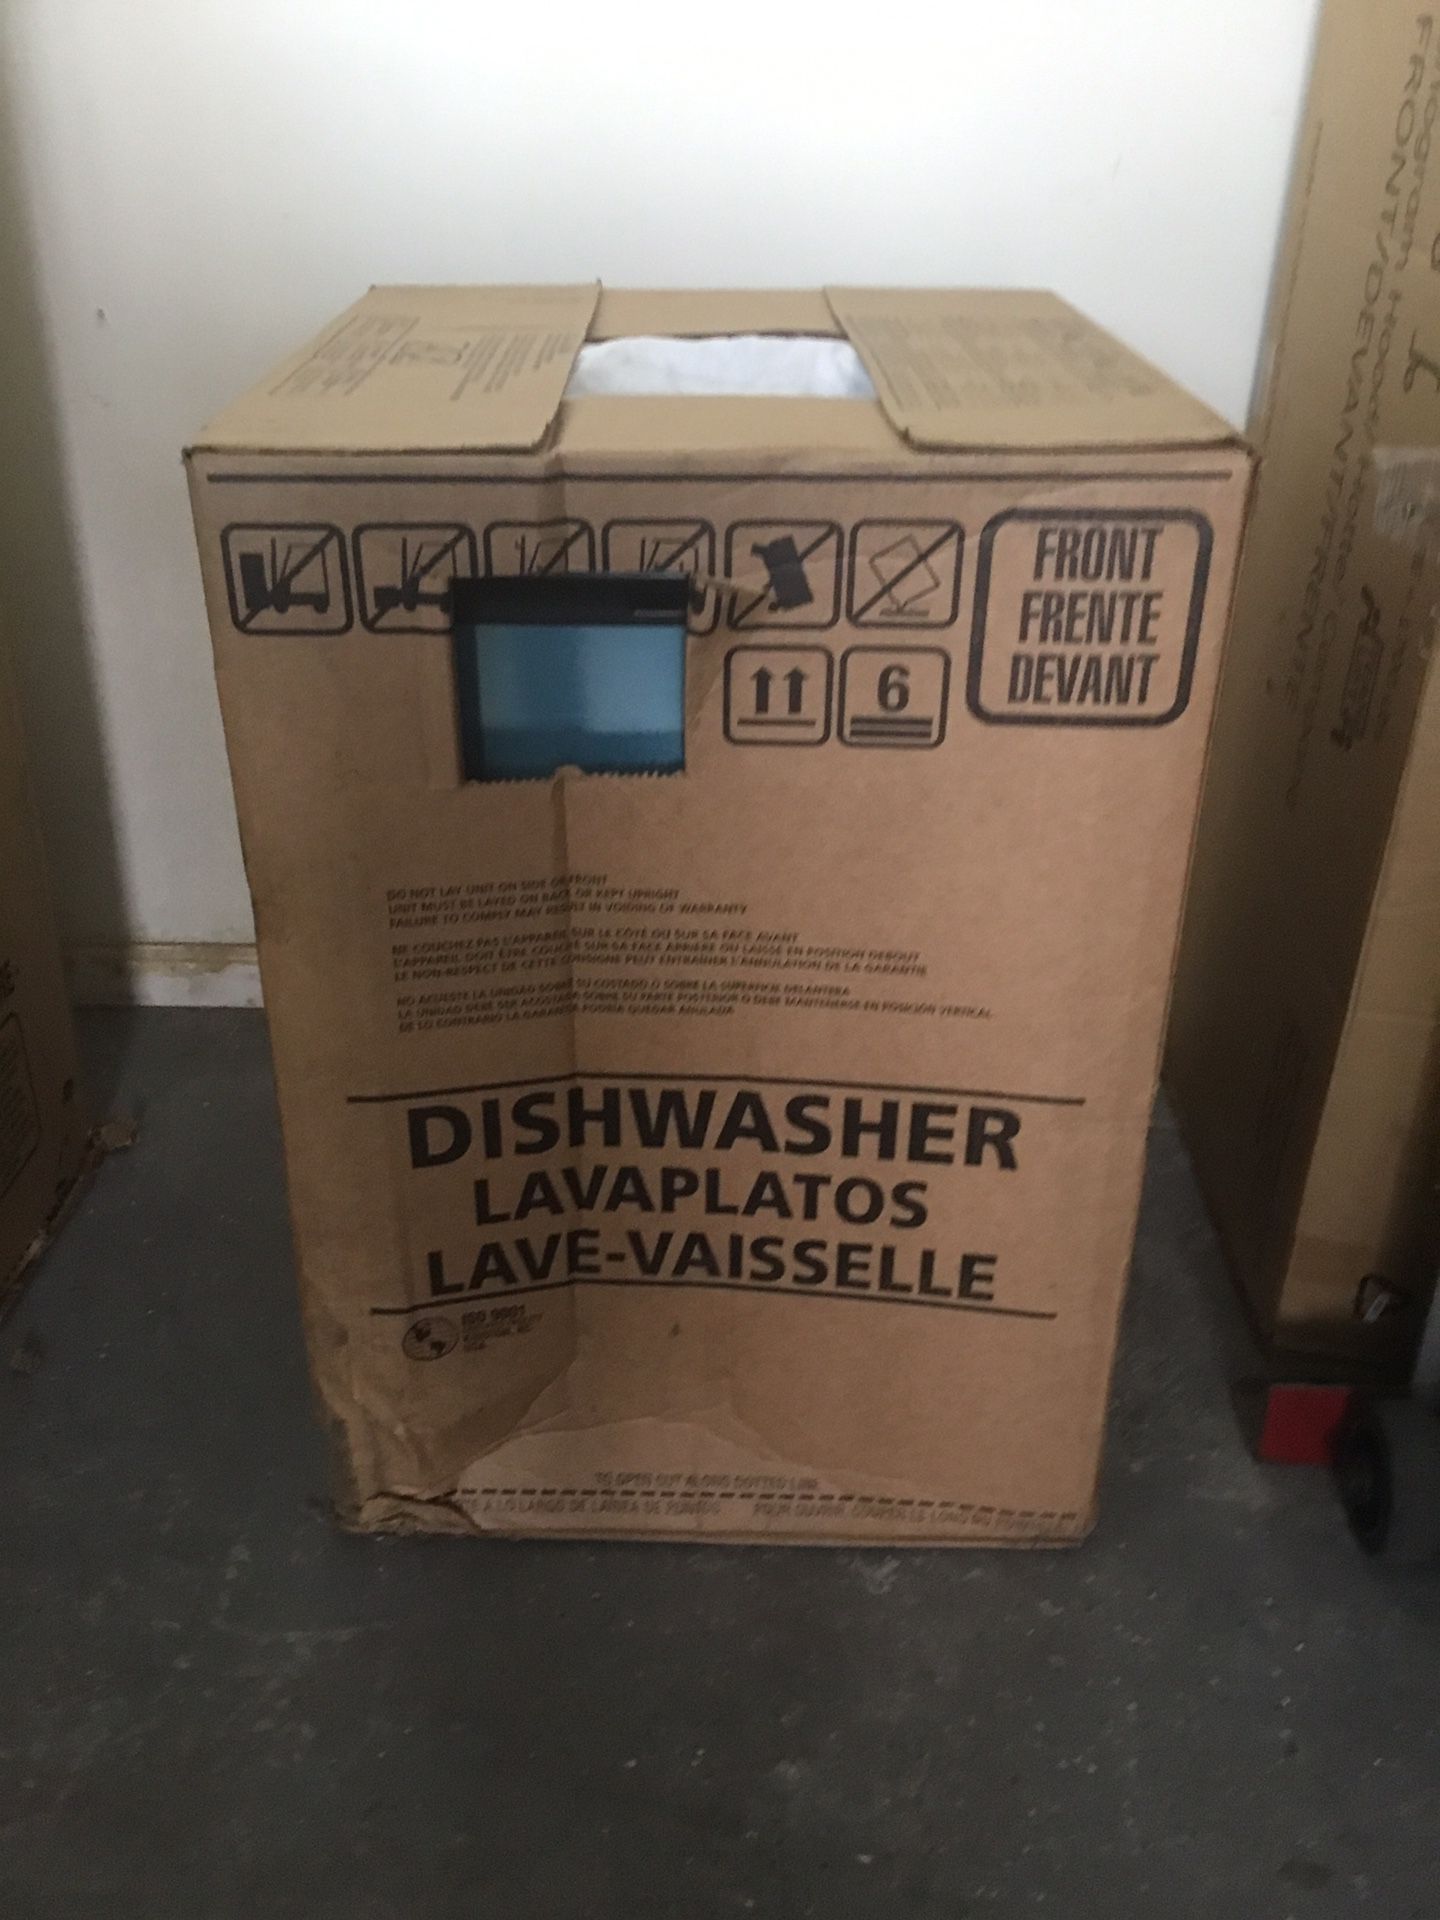 New dishwasher frigidaire stainless steel w 24”